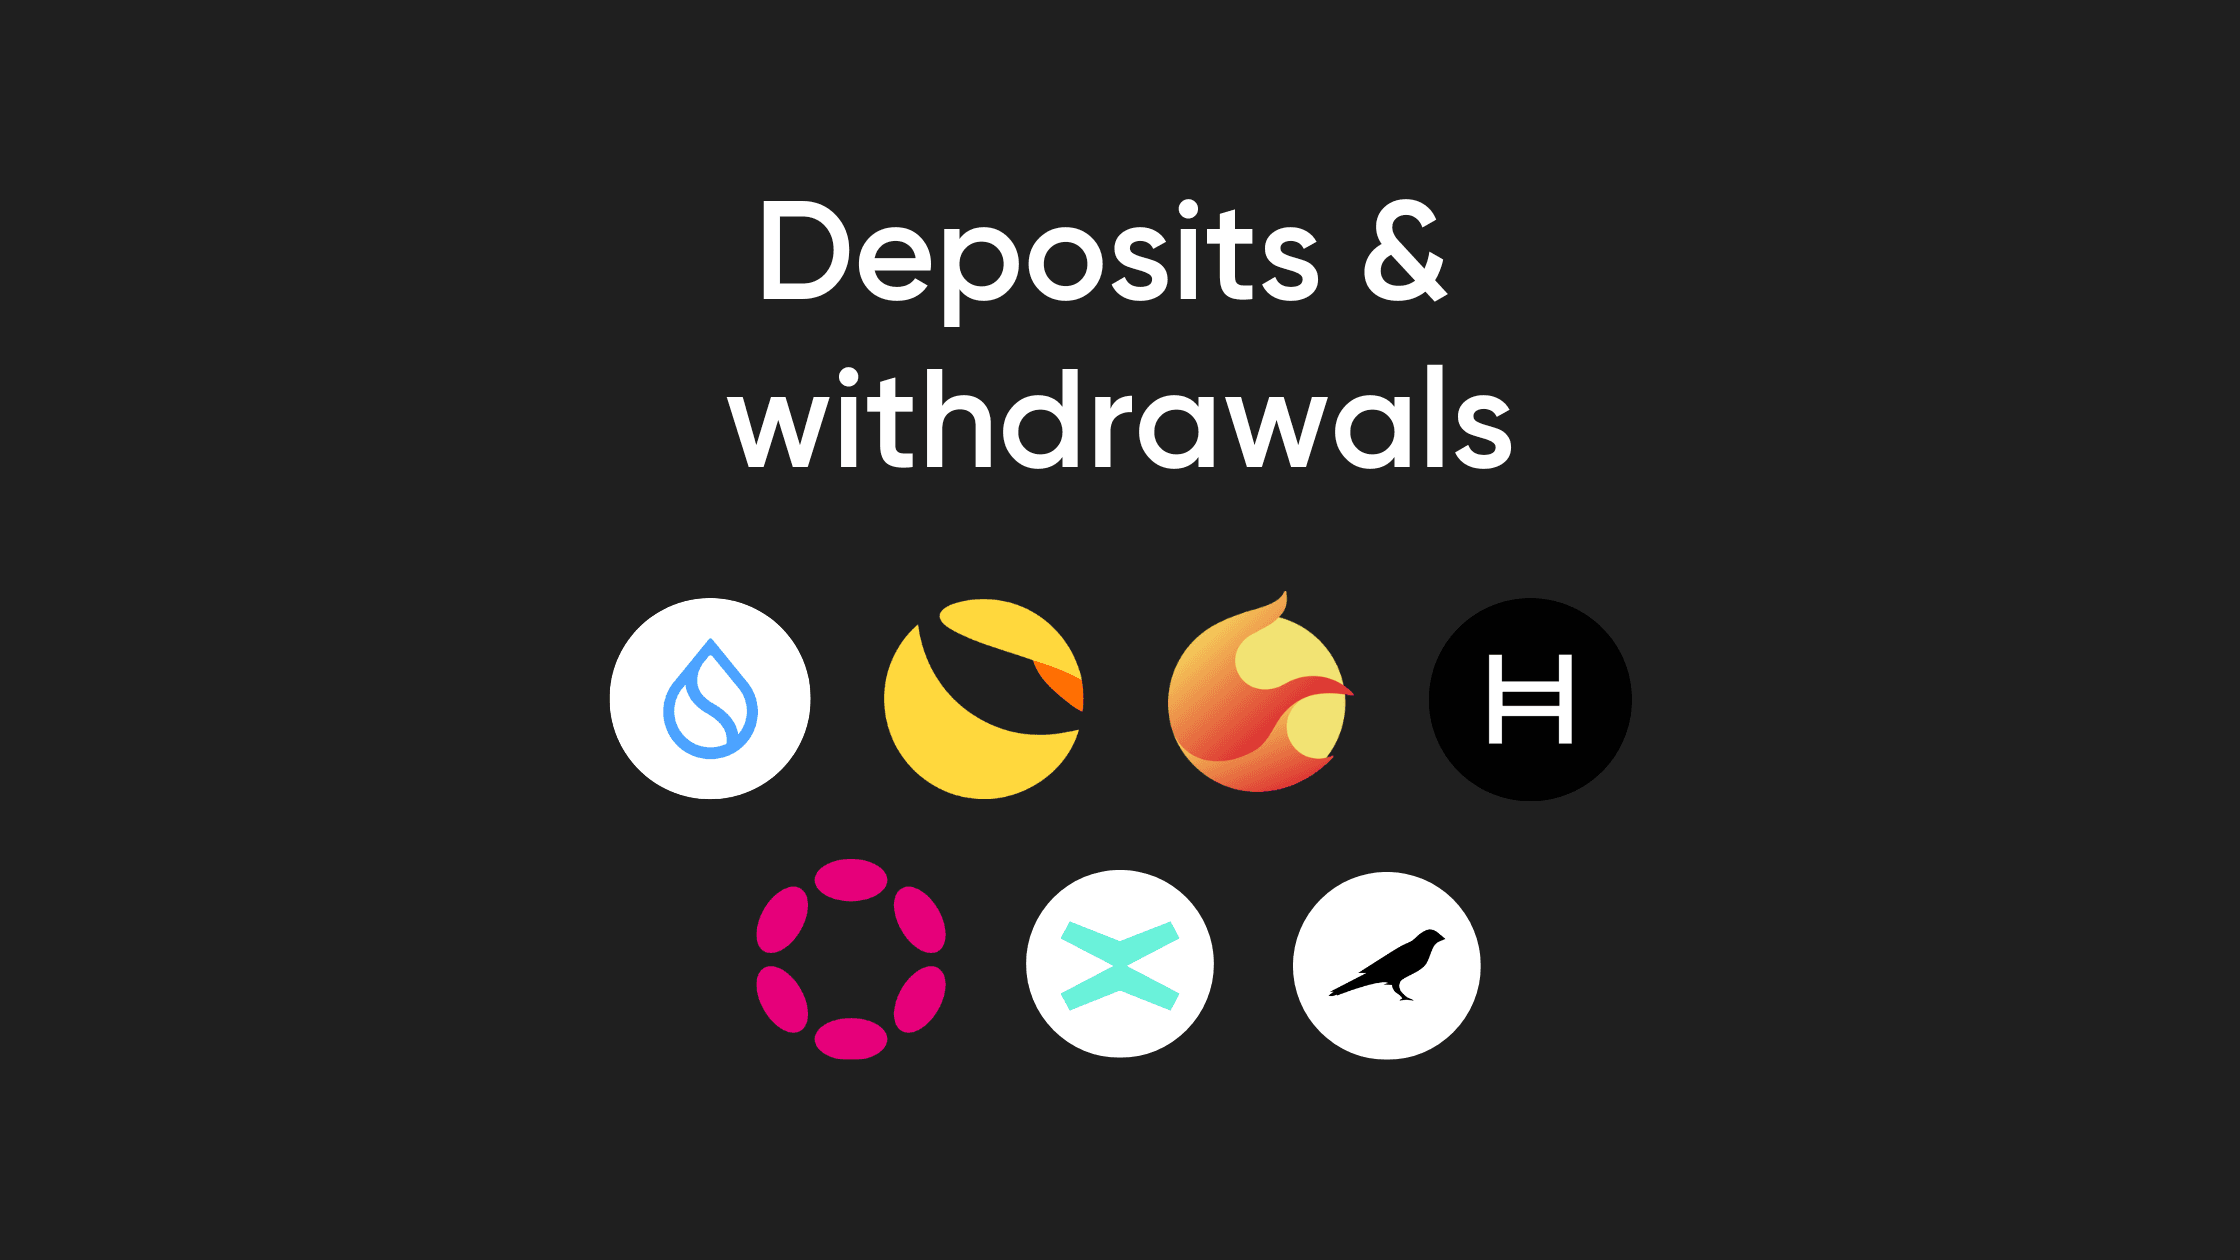 Deposits and withdrawals for SUI, LUNA, LUNA2, HBAR, DOT, EGLD & KSM.